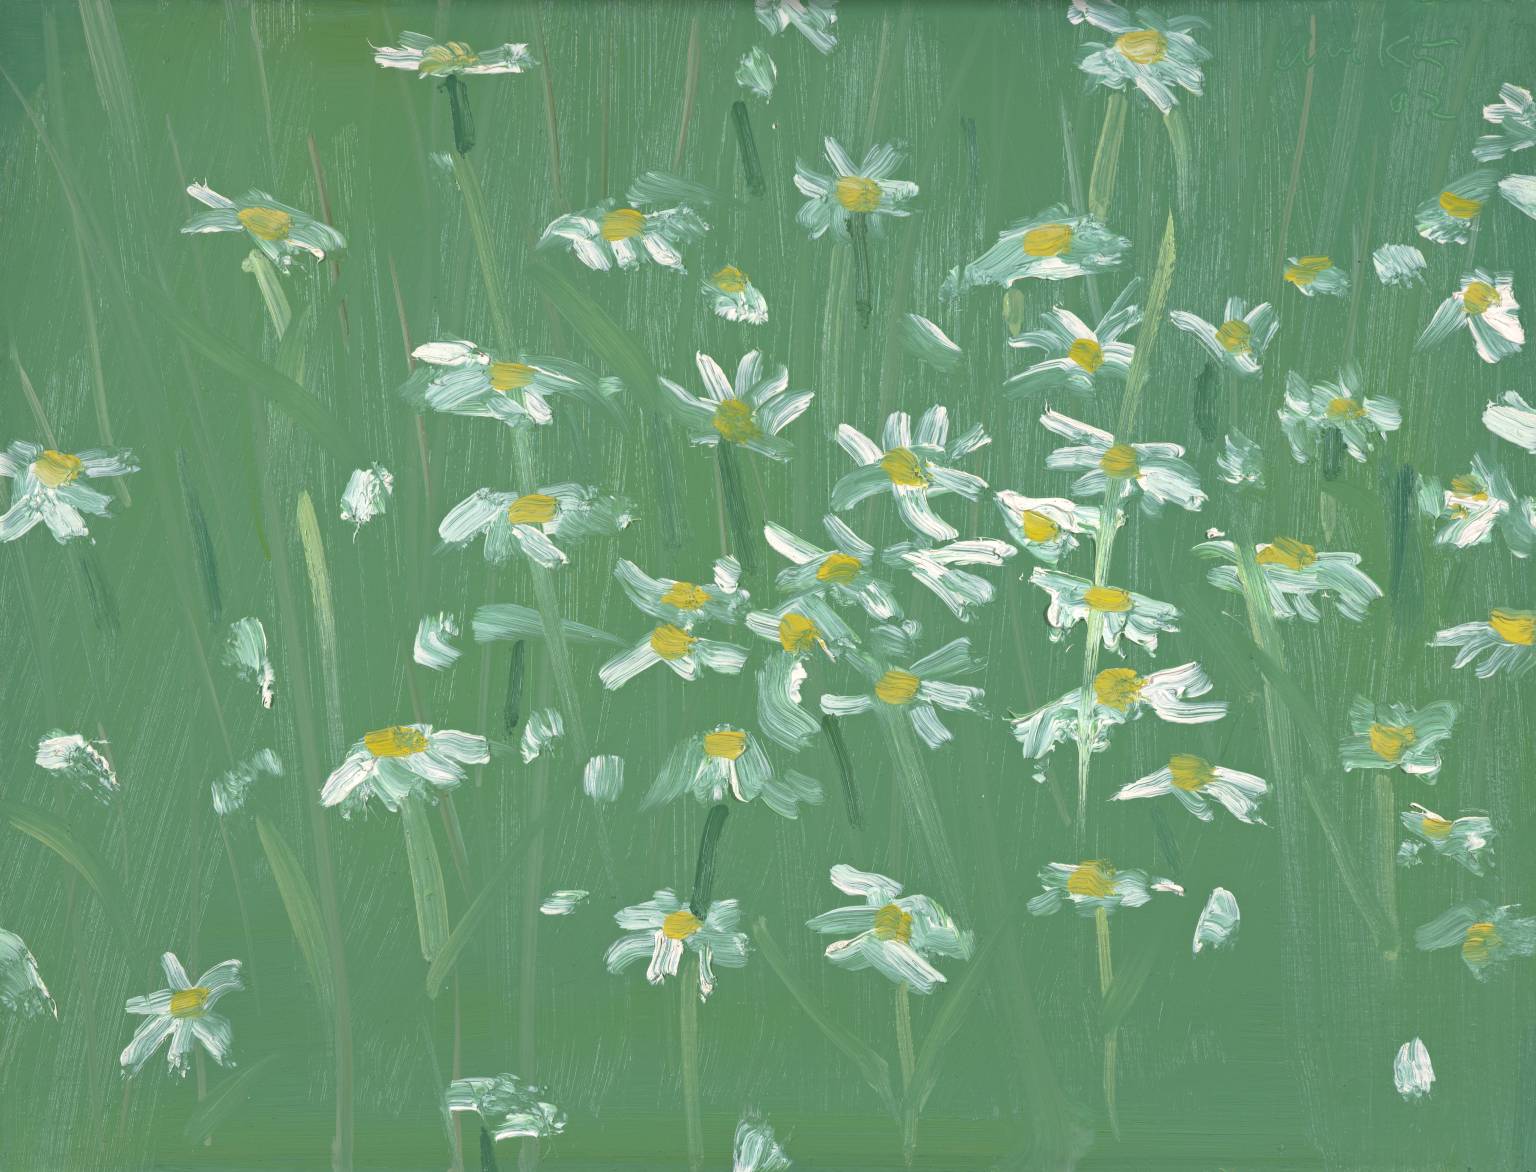 Daisies #2 by Alex Katz - Rosewood's April flower art